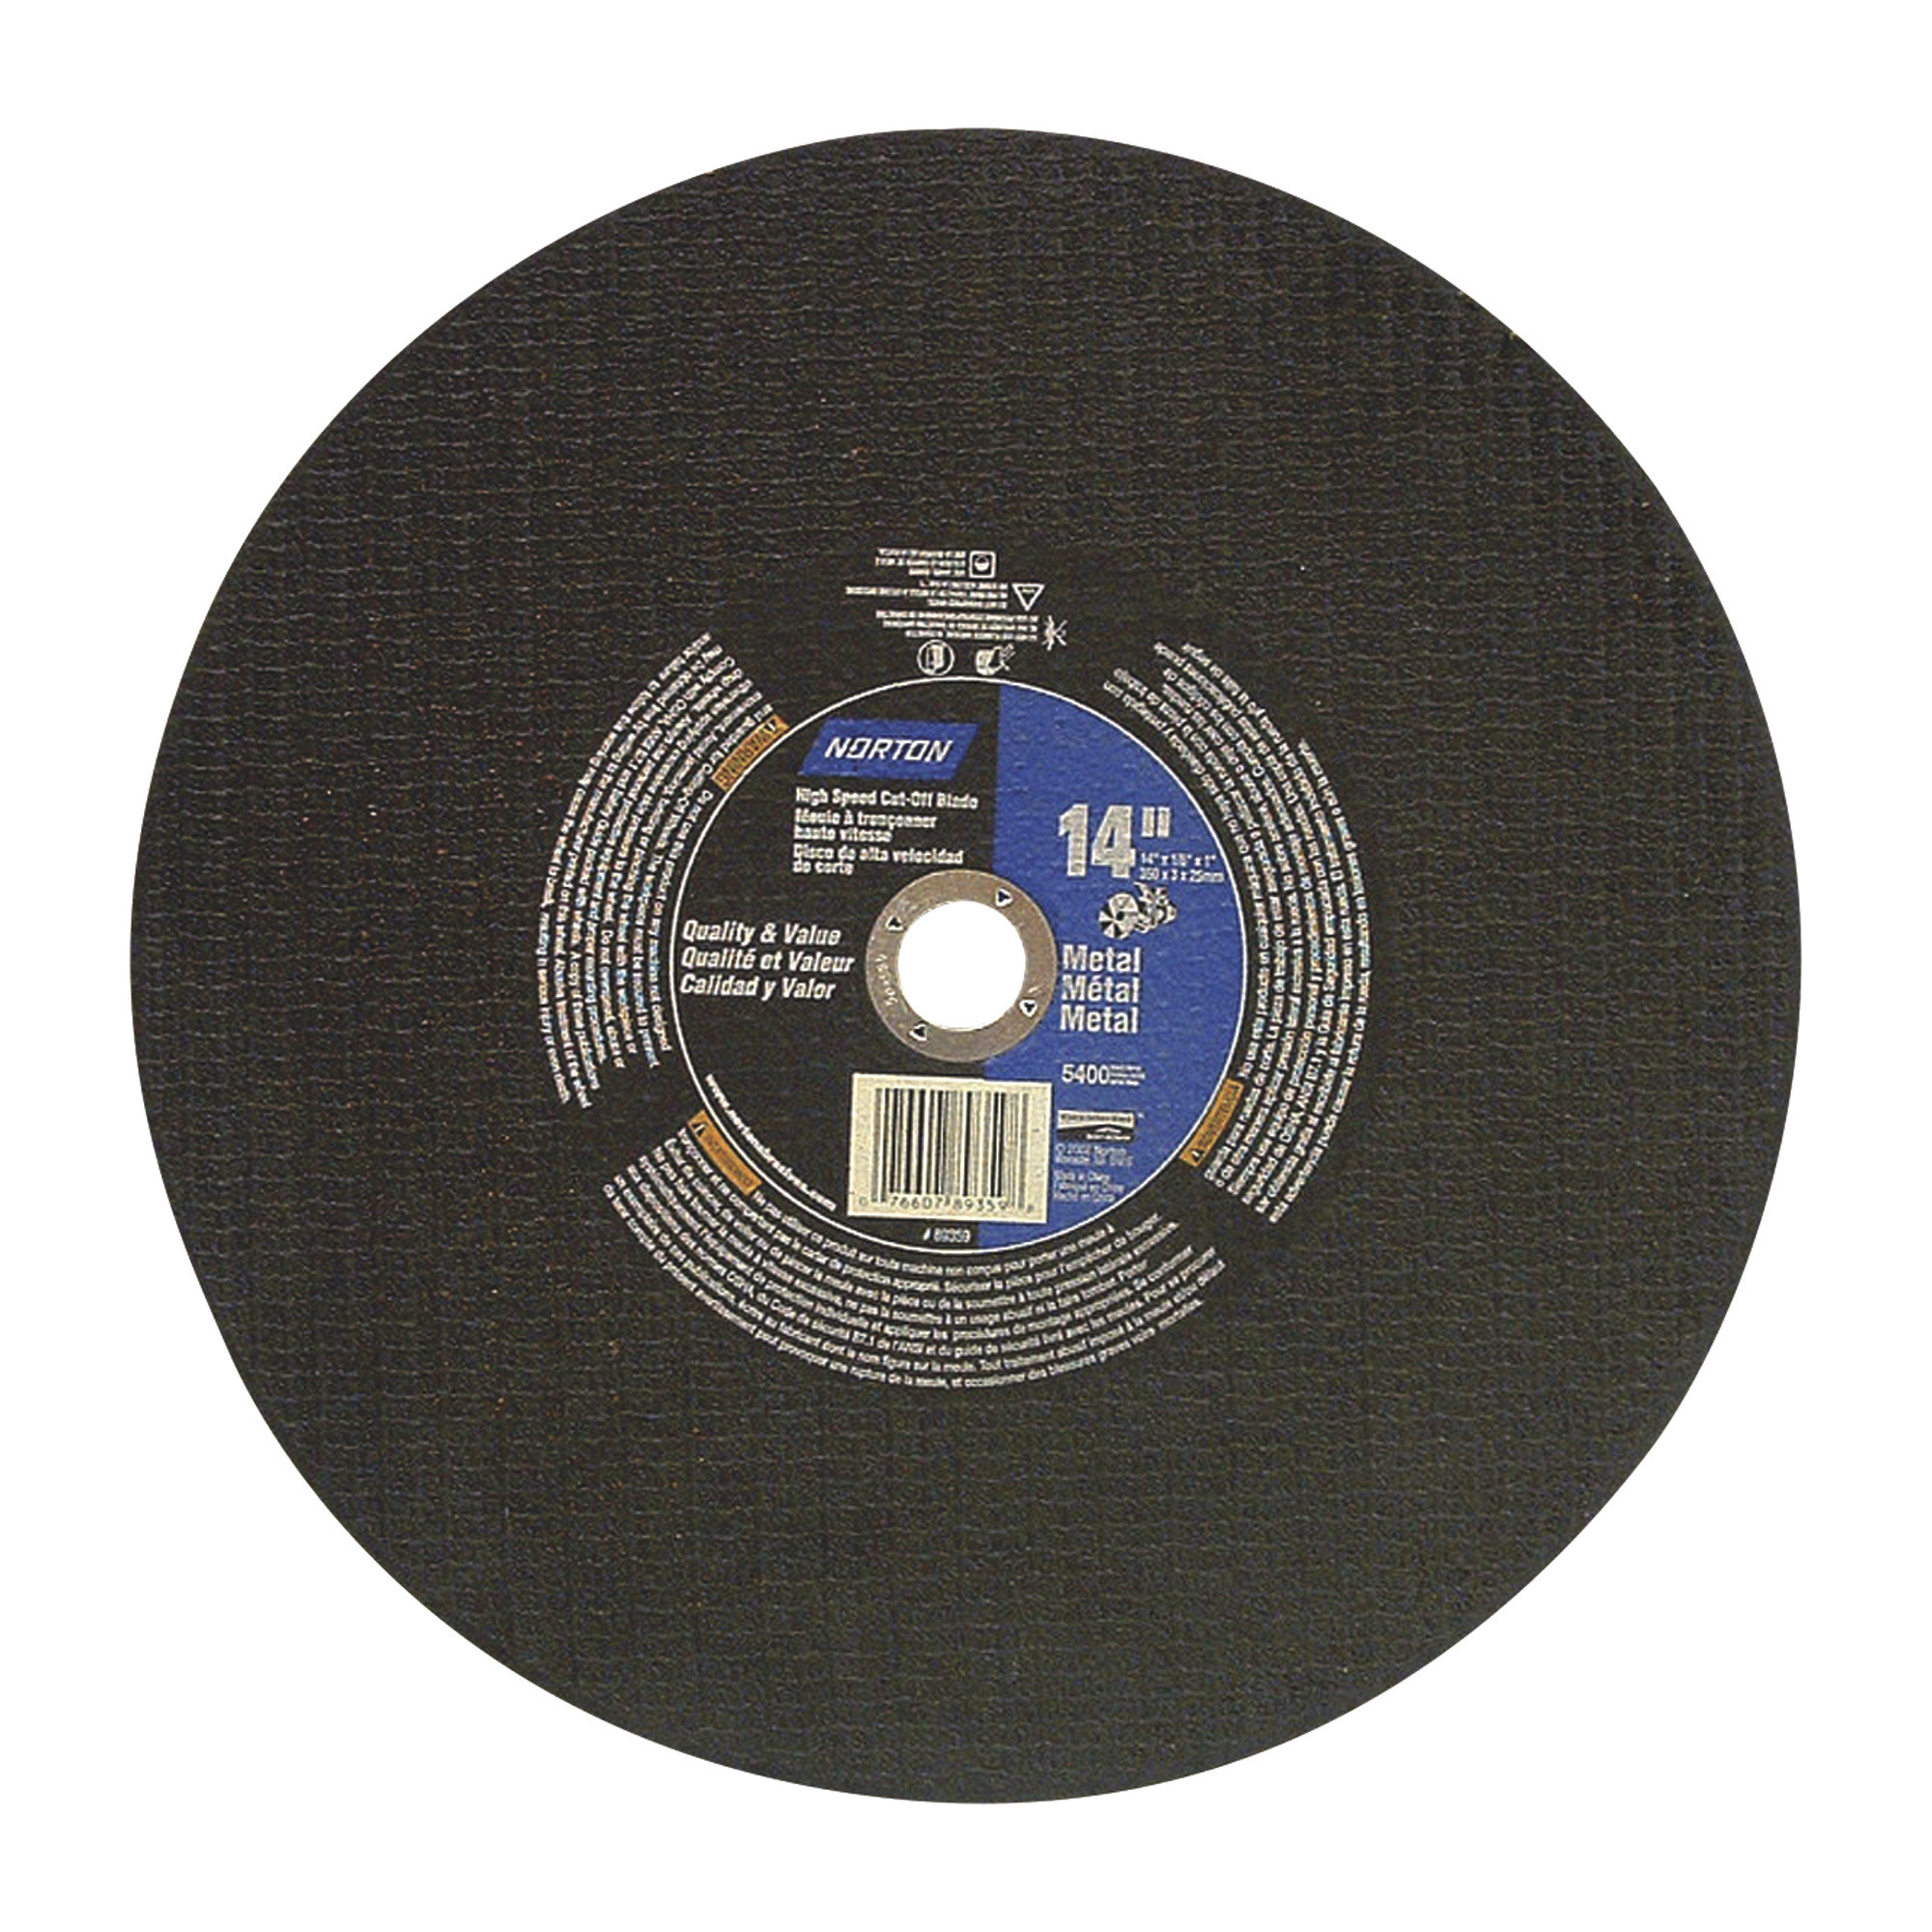 Norton Cutoff Wheel, 14Inch Dia, 5400 RPM, Model 076607-89359-8